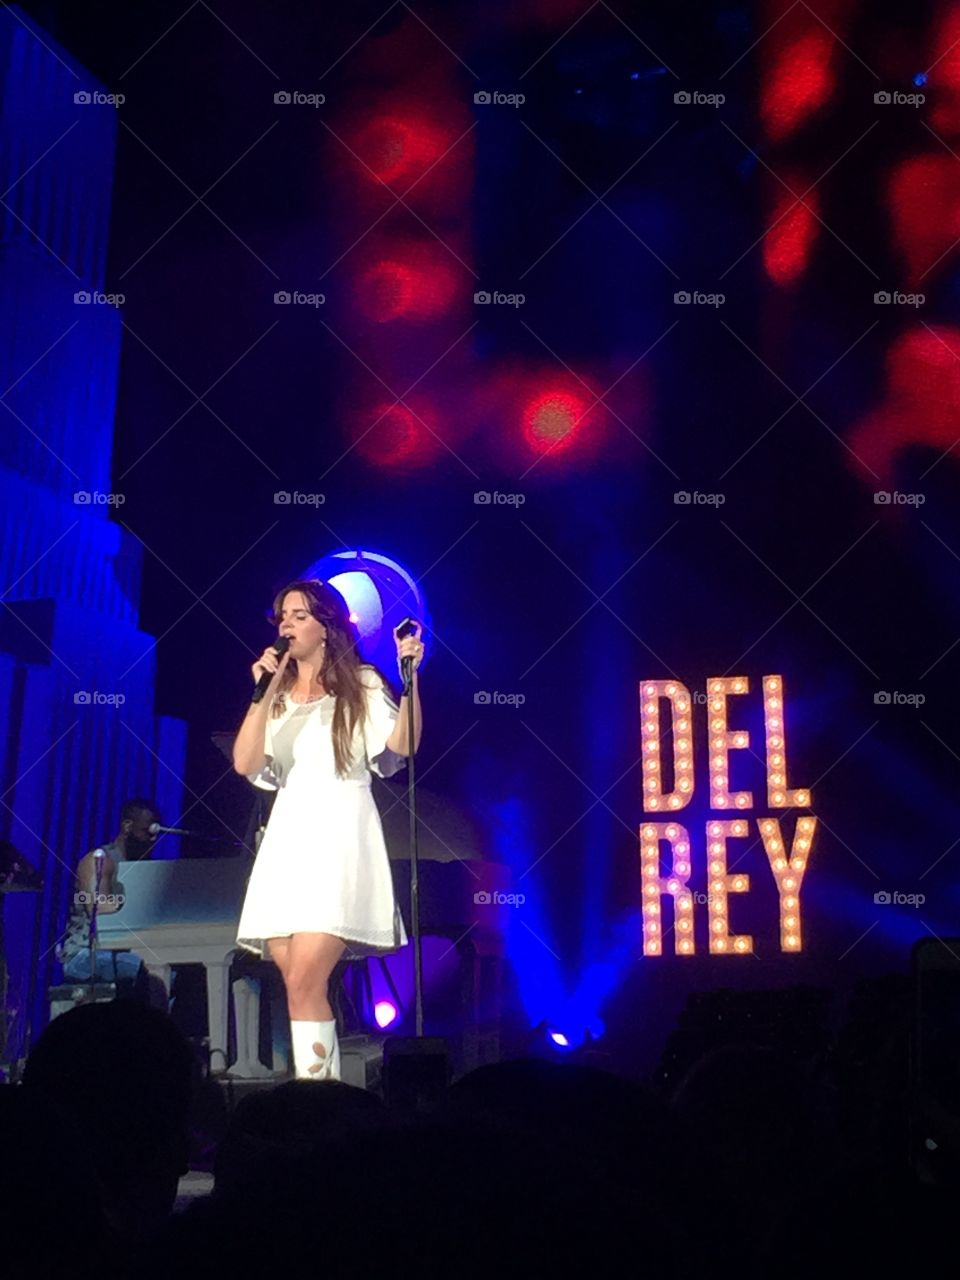 Lana Del Rey from Ultraviolence concert